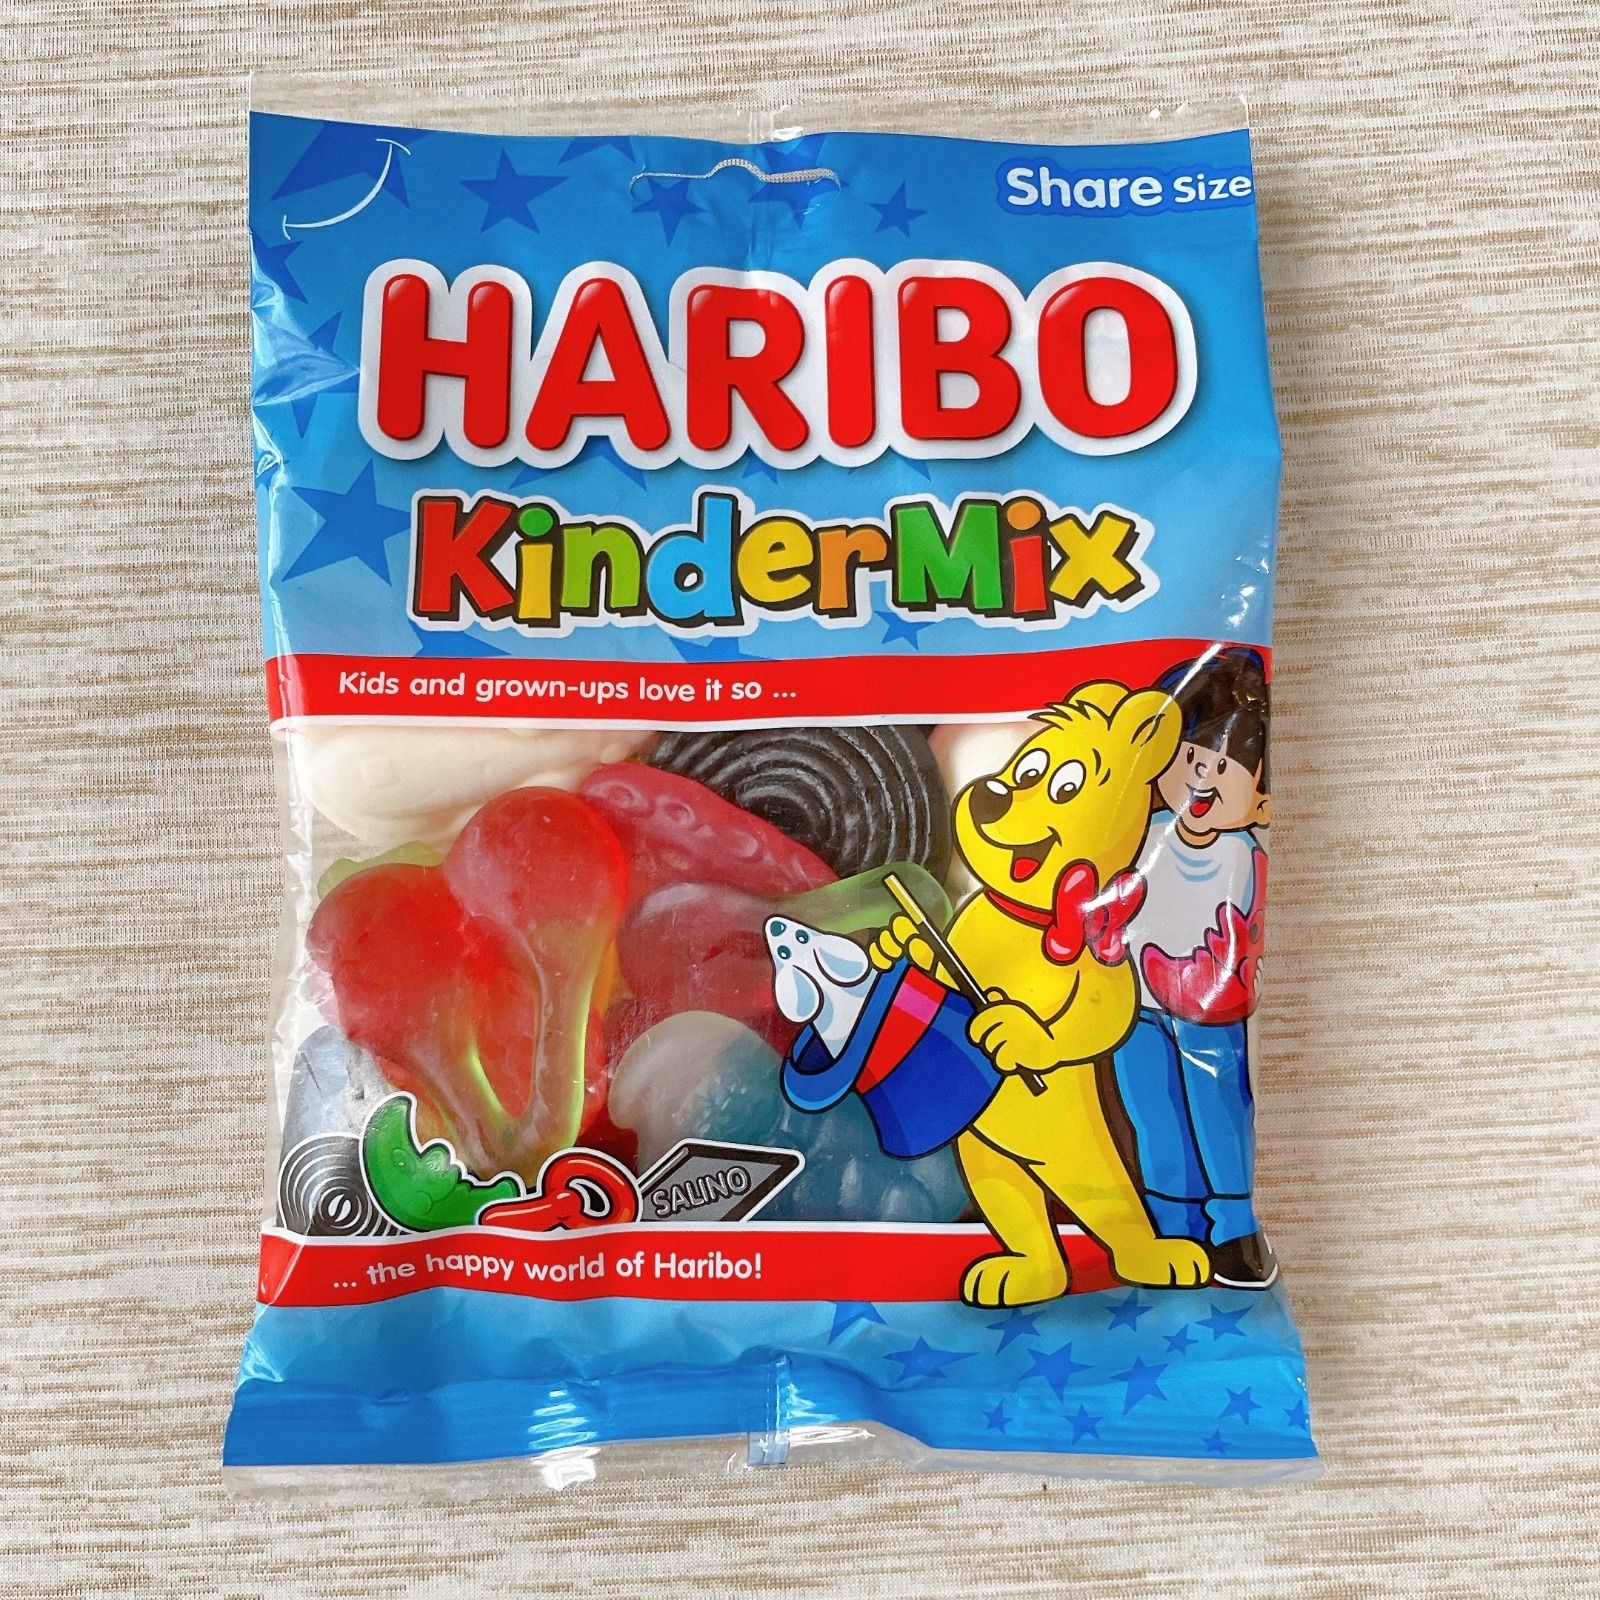 HARIBO【日本未販売】kinder mix 185g ハリボーグミ - メルカリ